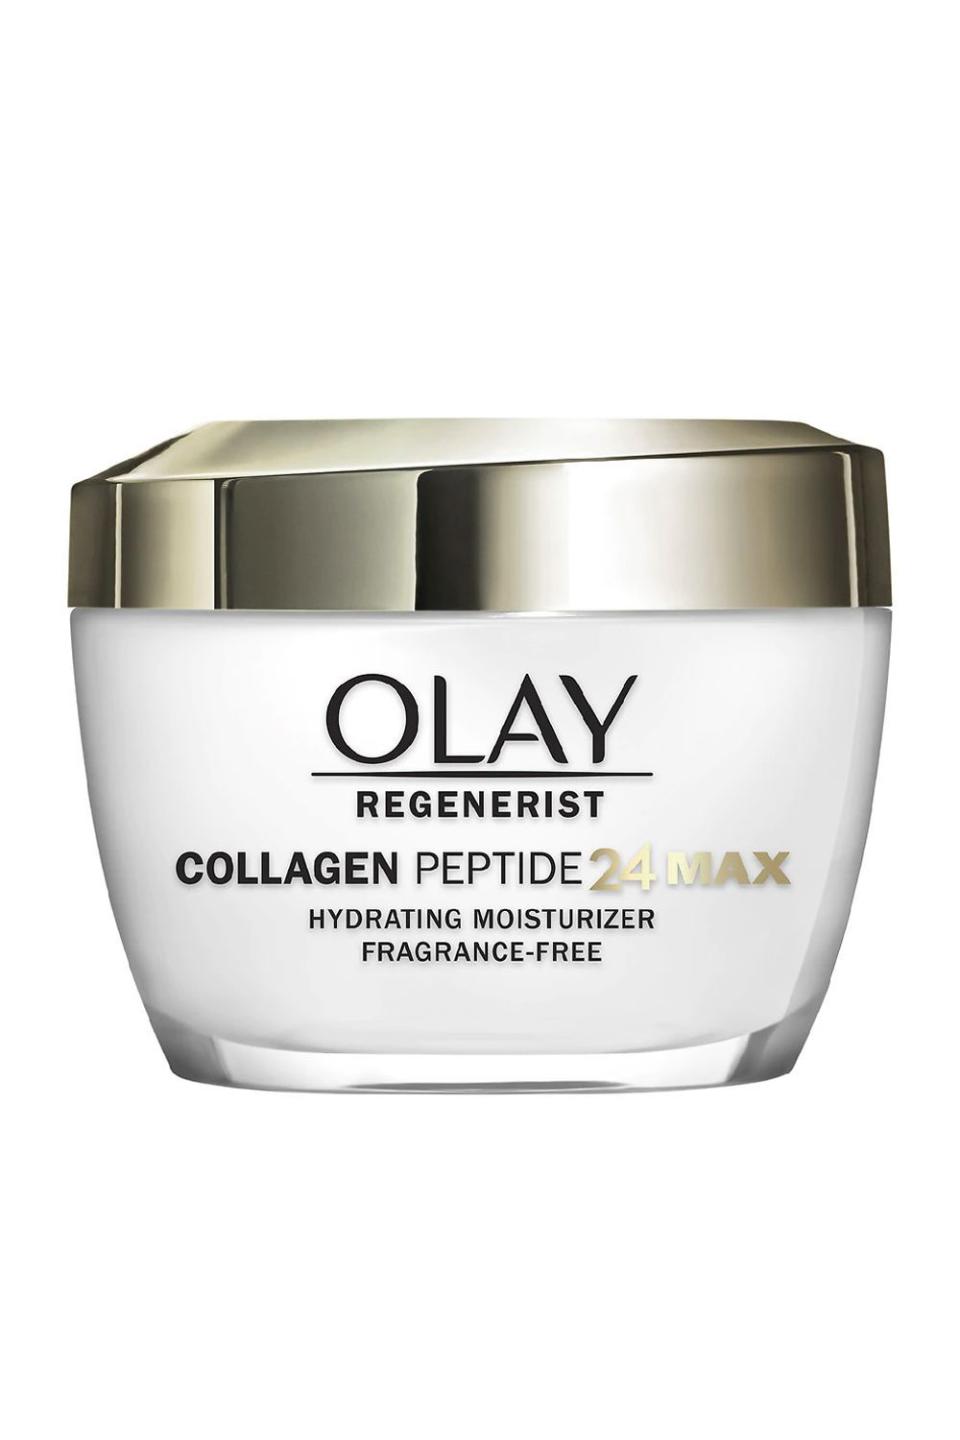 5) Olay Regenerist Collagen Peptide 24 Max Face Moisturizer